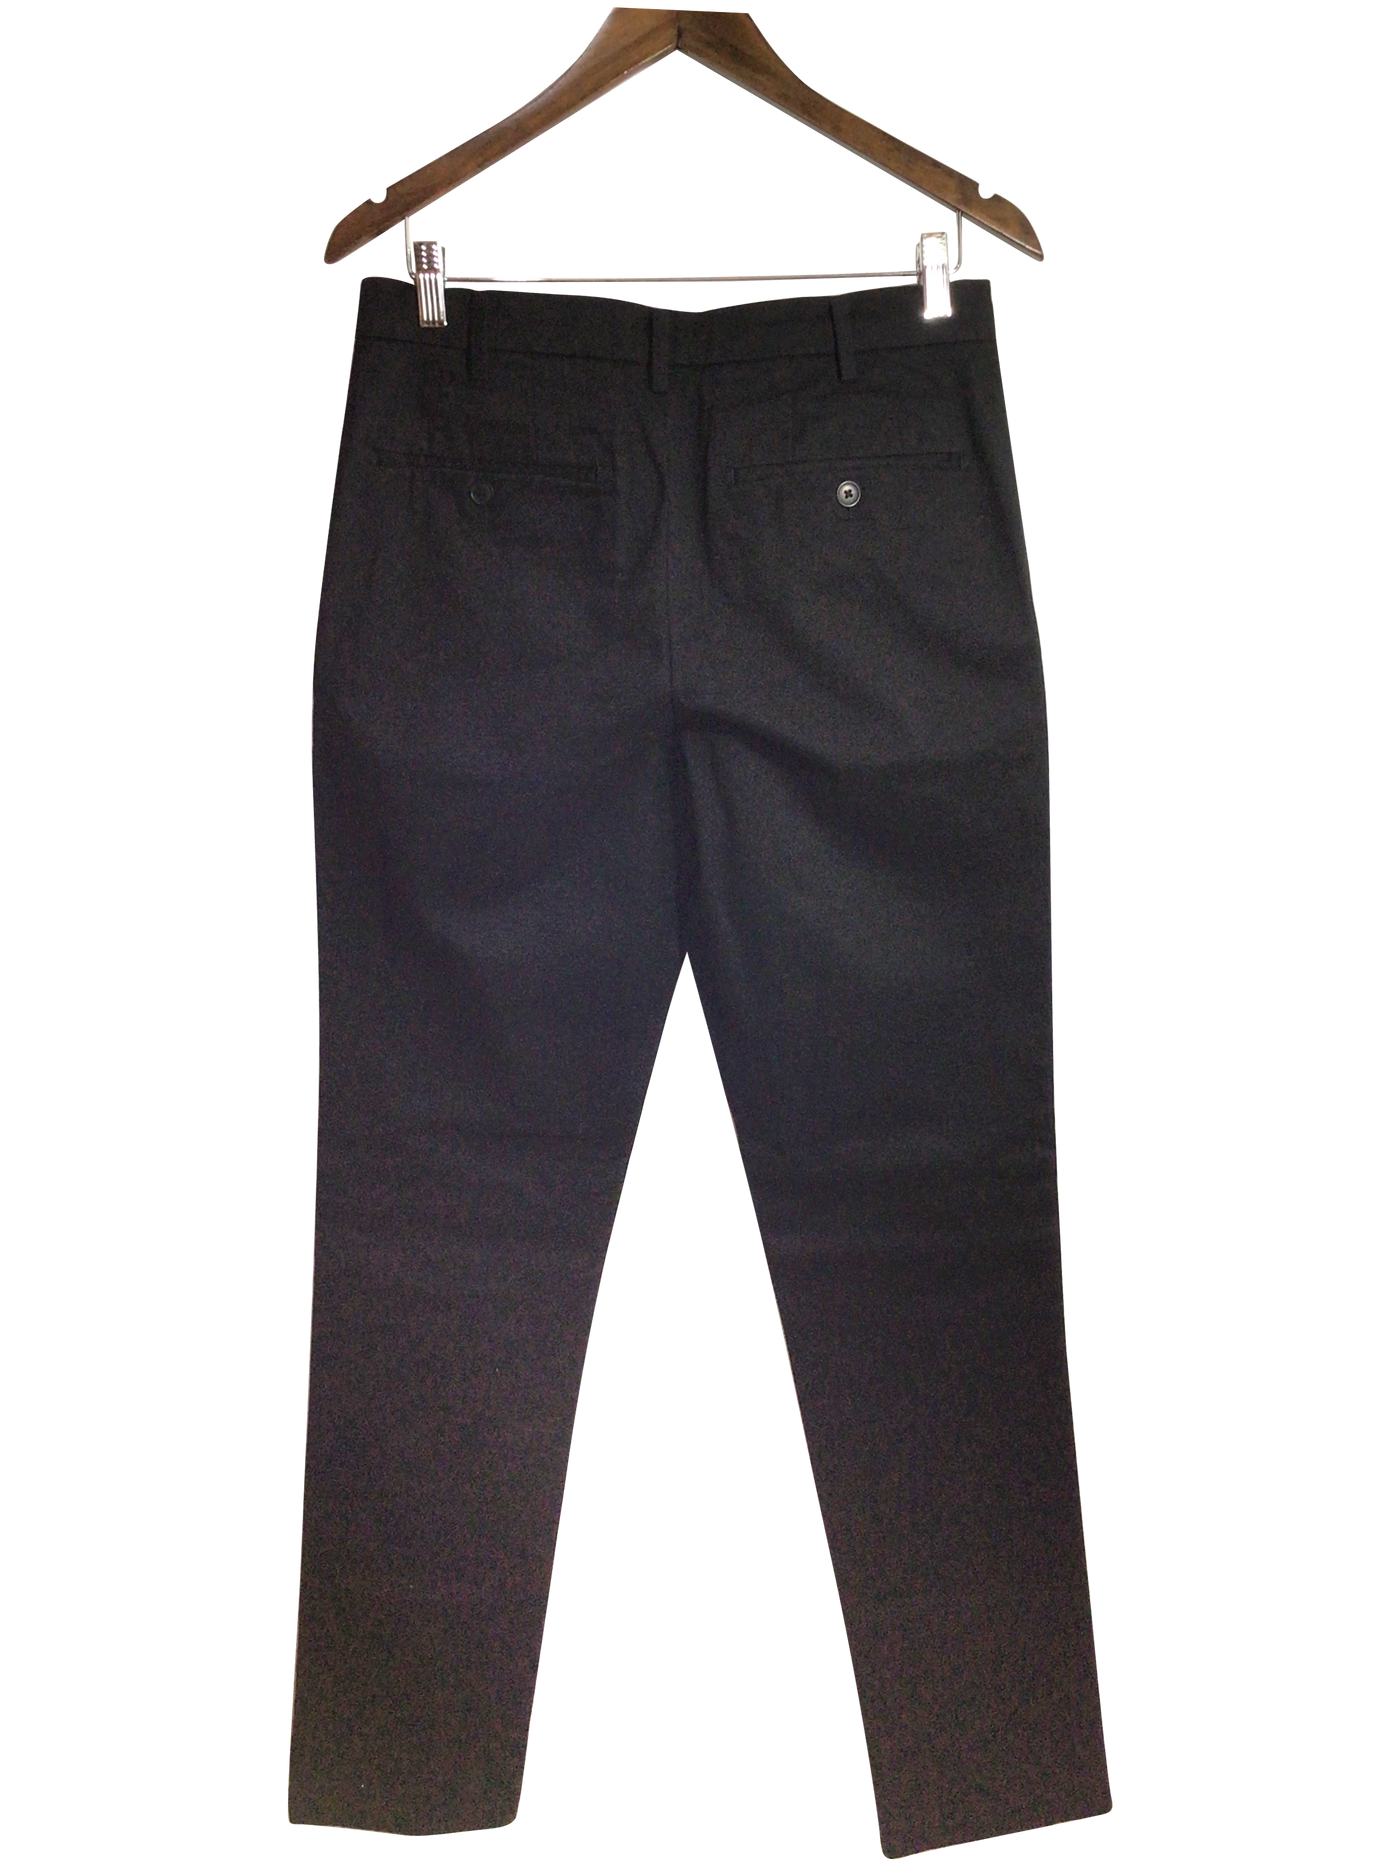 UNIONBAY Men Work Pants Regular fit in Black - Size 31x34 | 12.99 $ KOOP